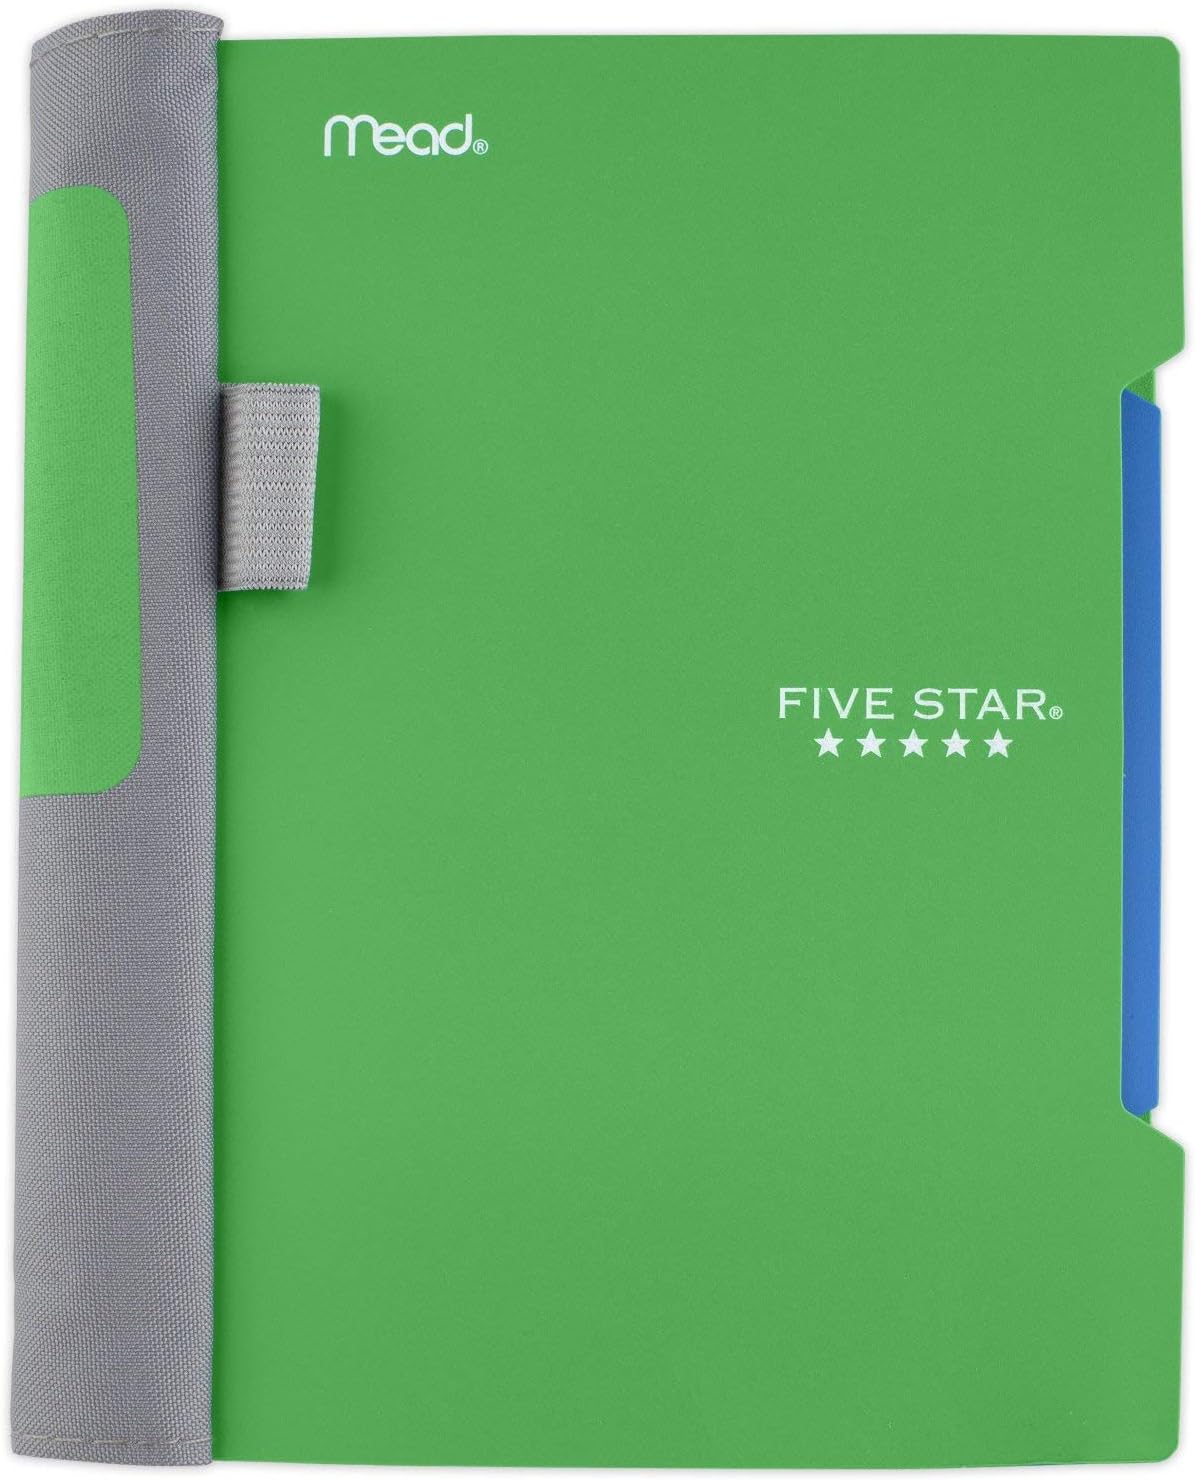 Five Star Advance Small Spiral Notebook, 1 Subject, [...]